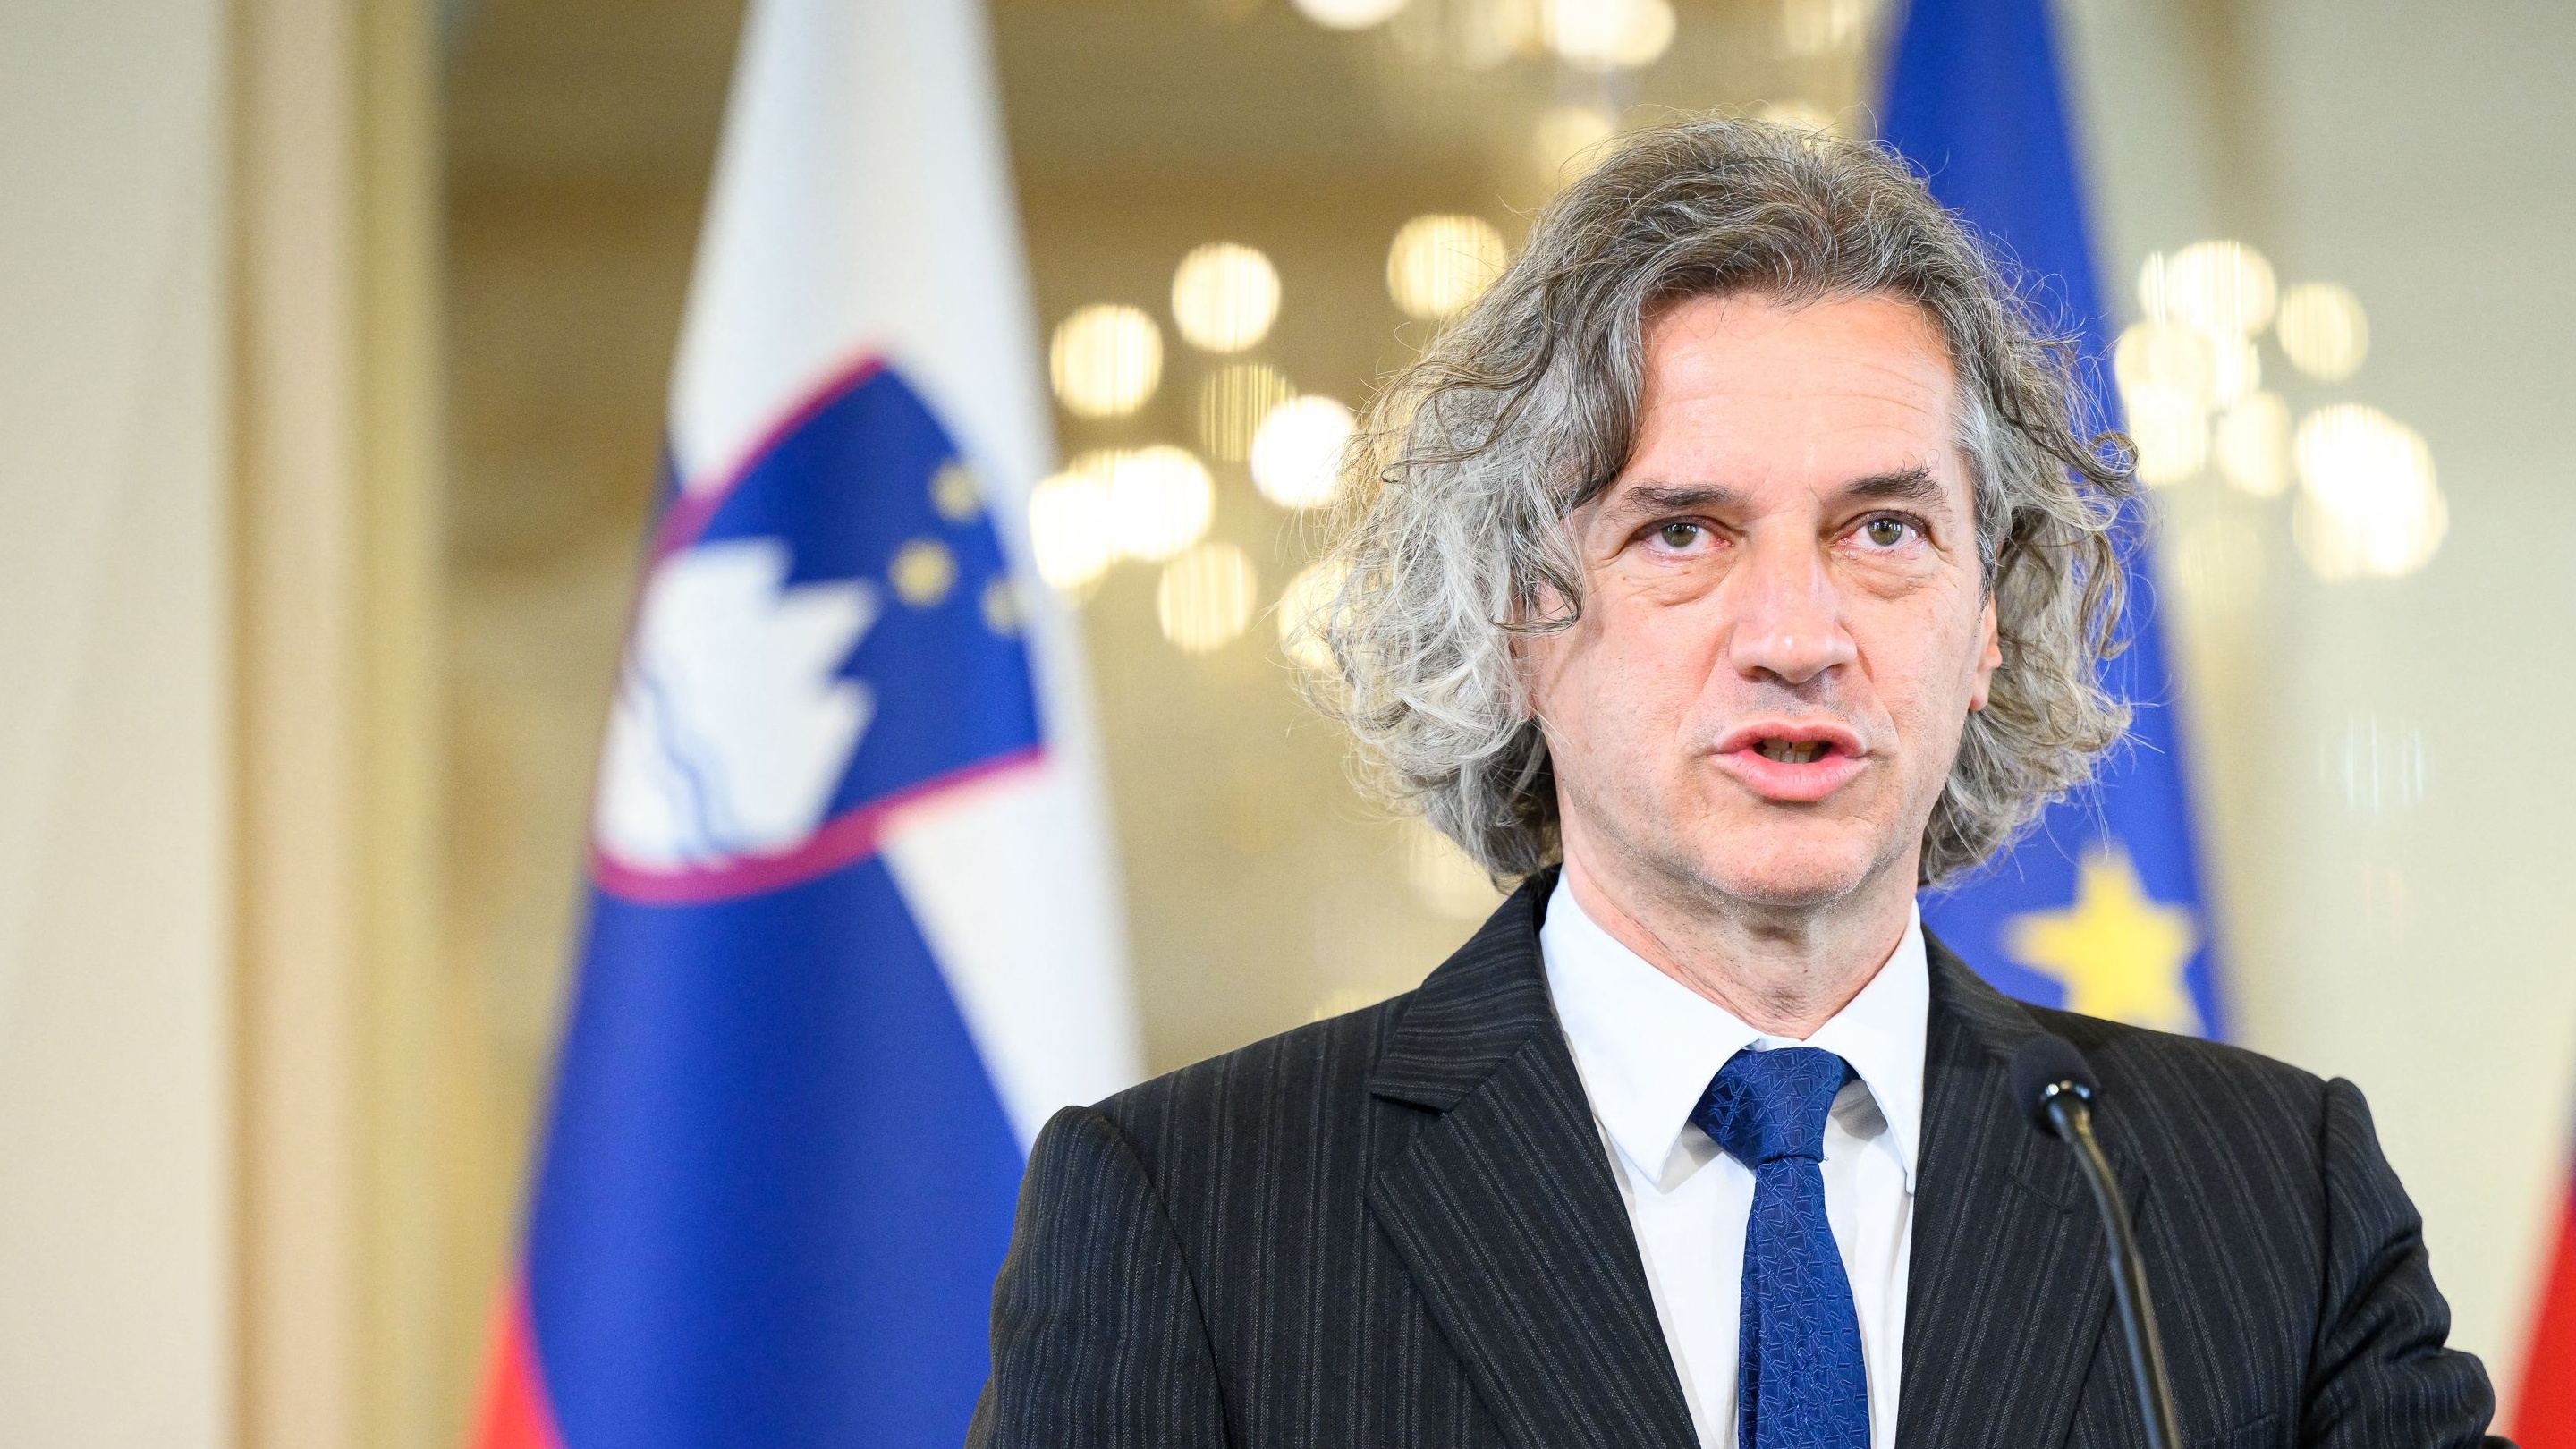 New Slovenian Prime Minister Robert Golob